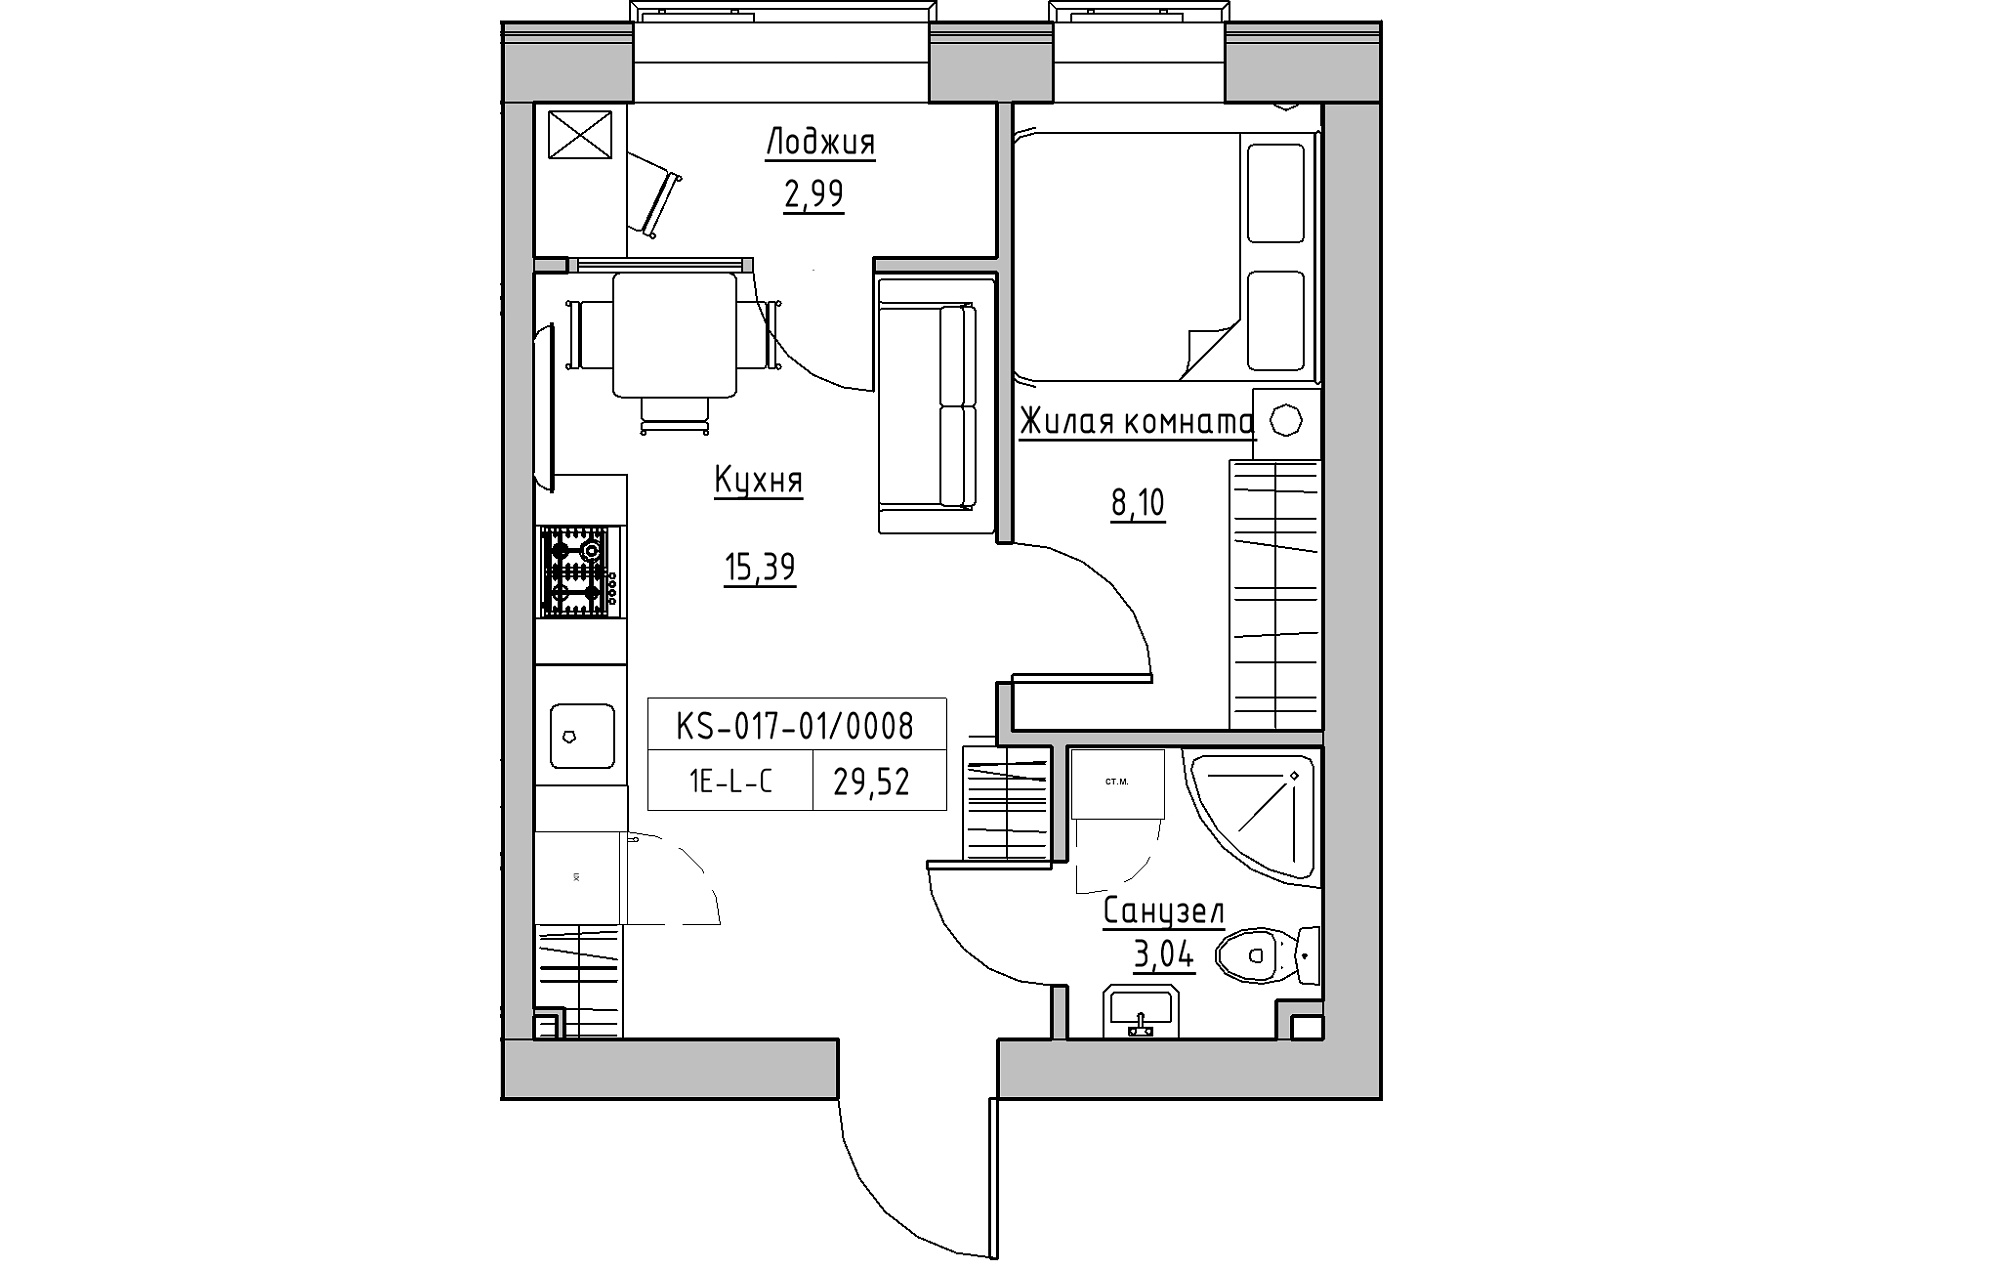 Planning 1-rm flats area 29.52m2, KS-017-01/0008.